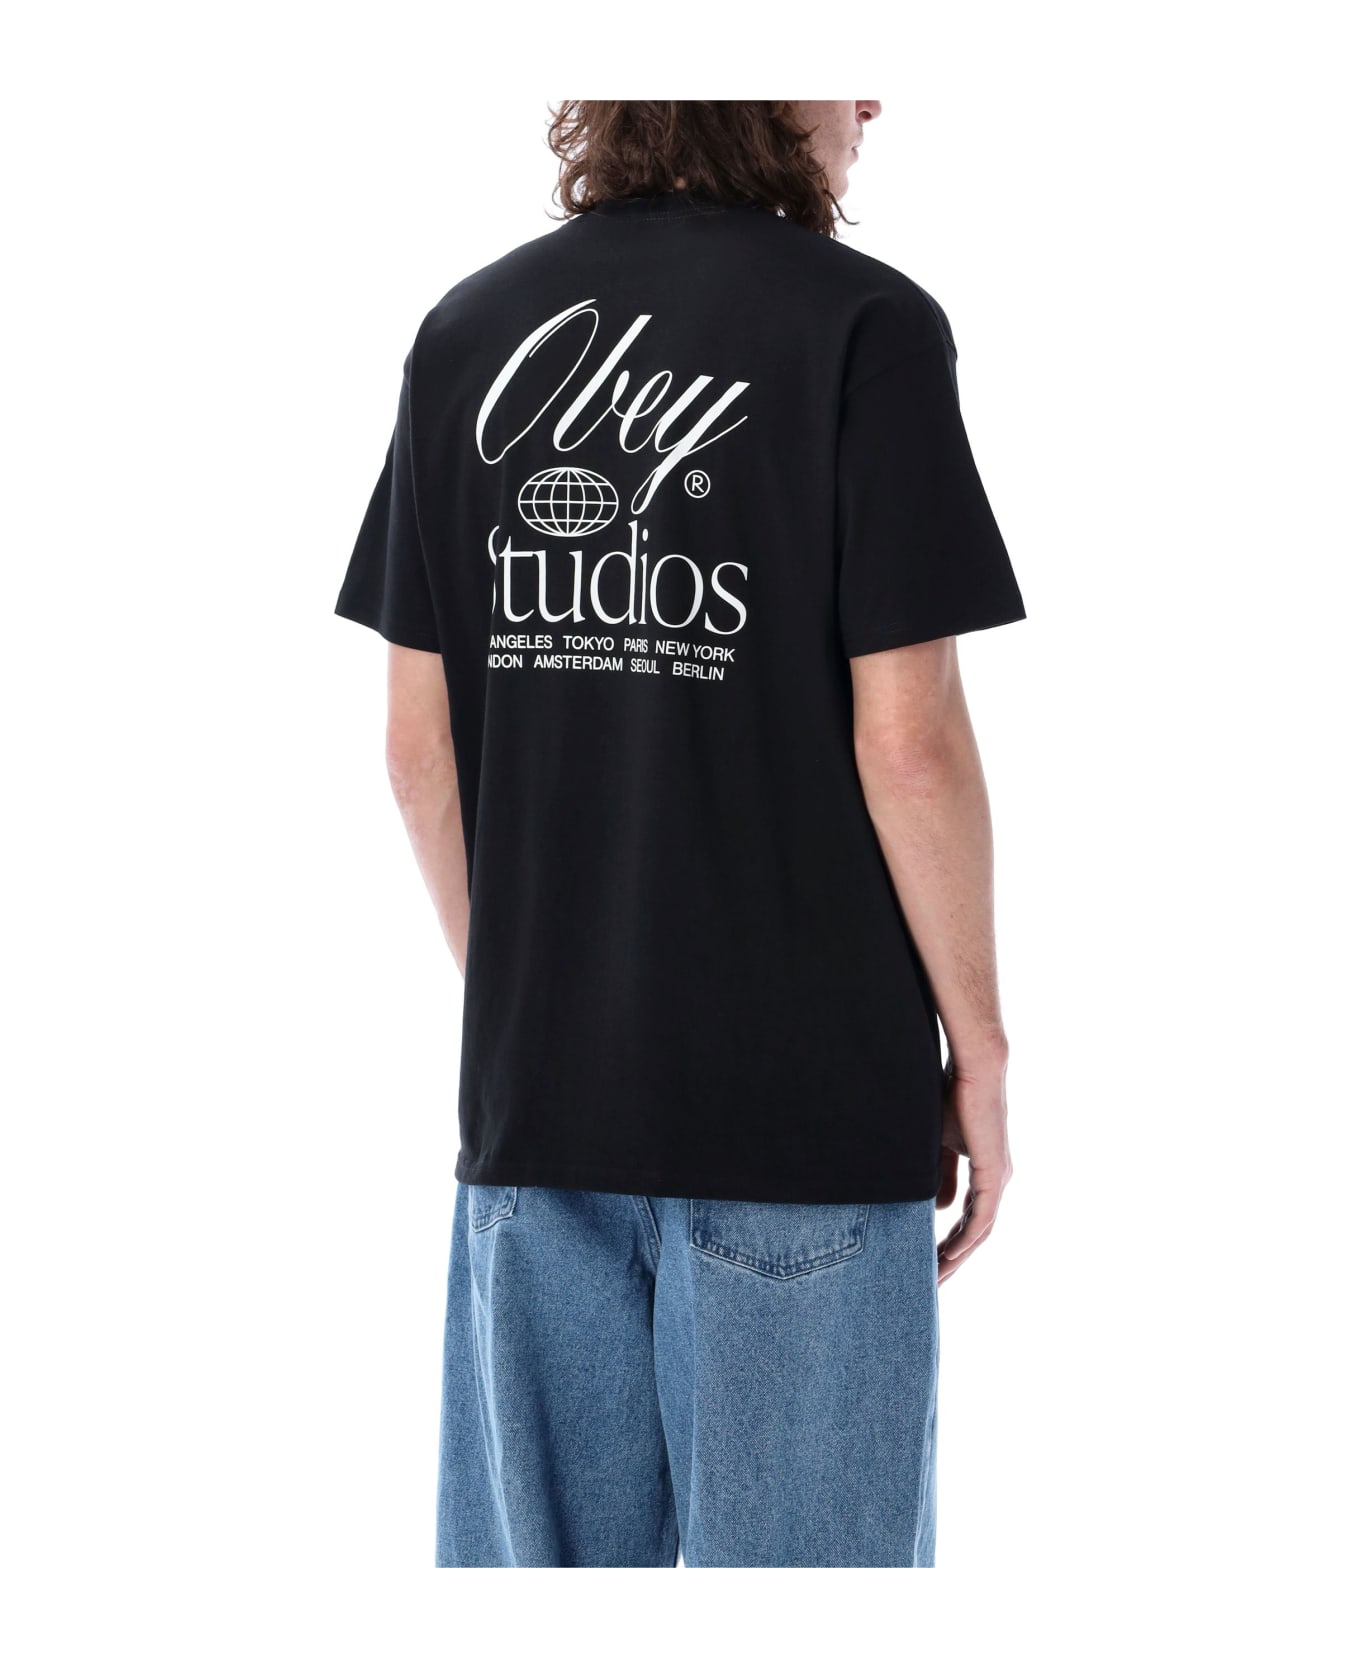 Obey Studios Worldwide T-shirt - BLACK